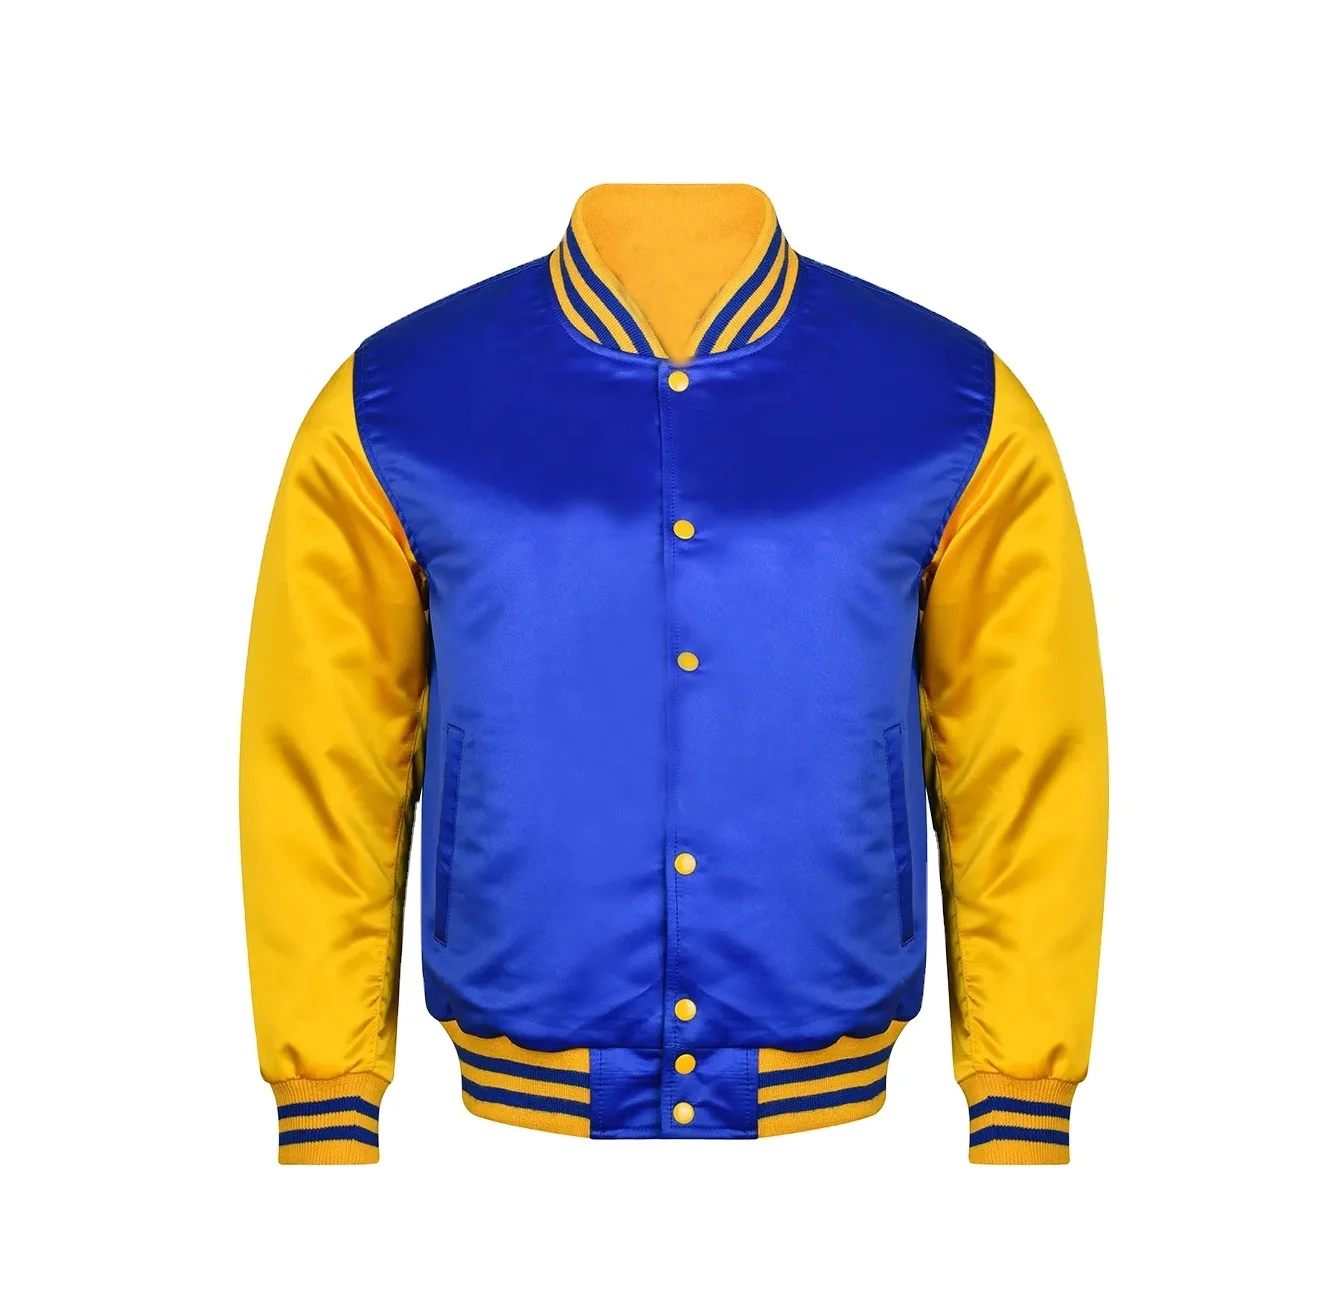 Men's Royal Blue and Yellow Varsity Jacket